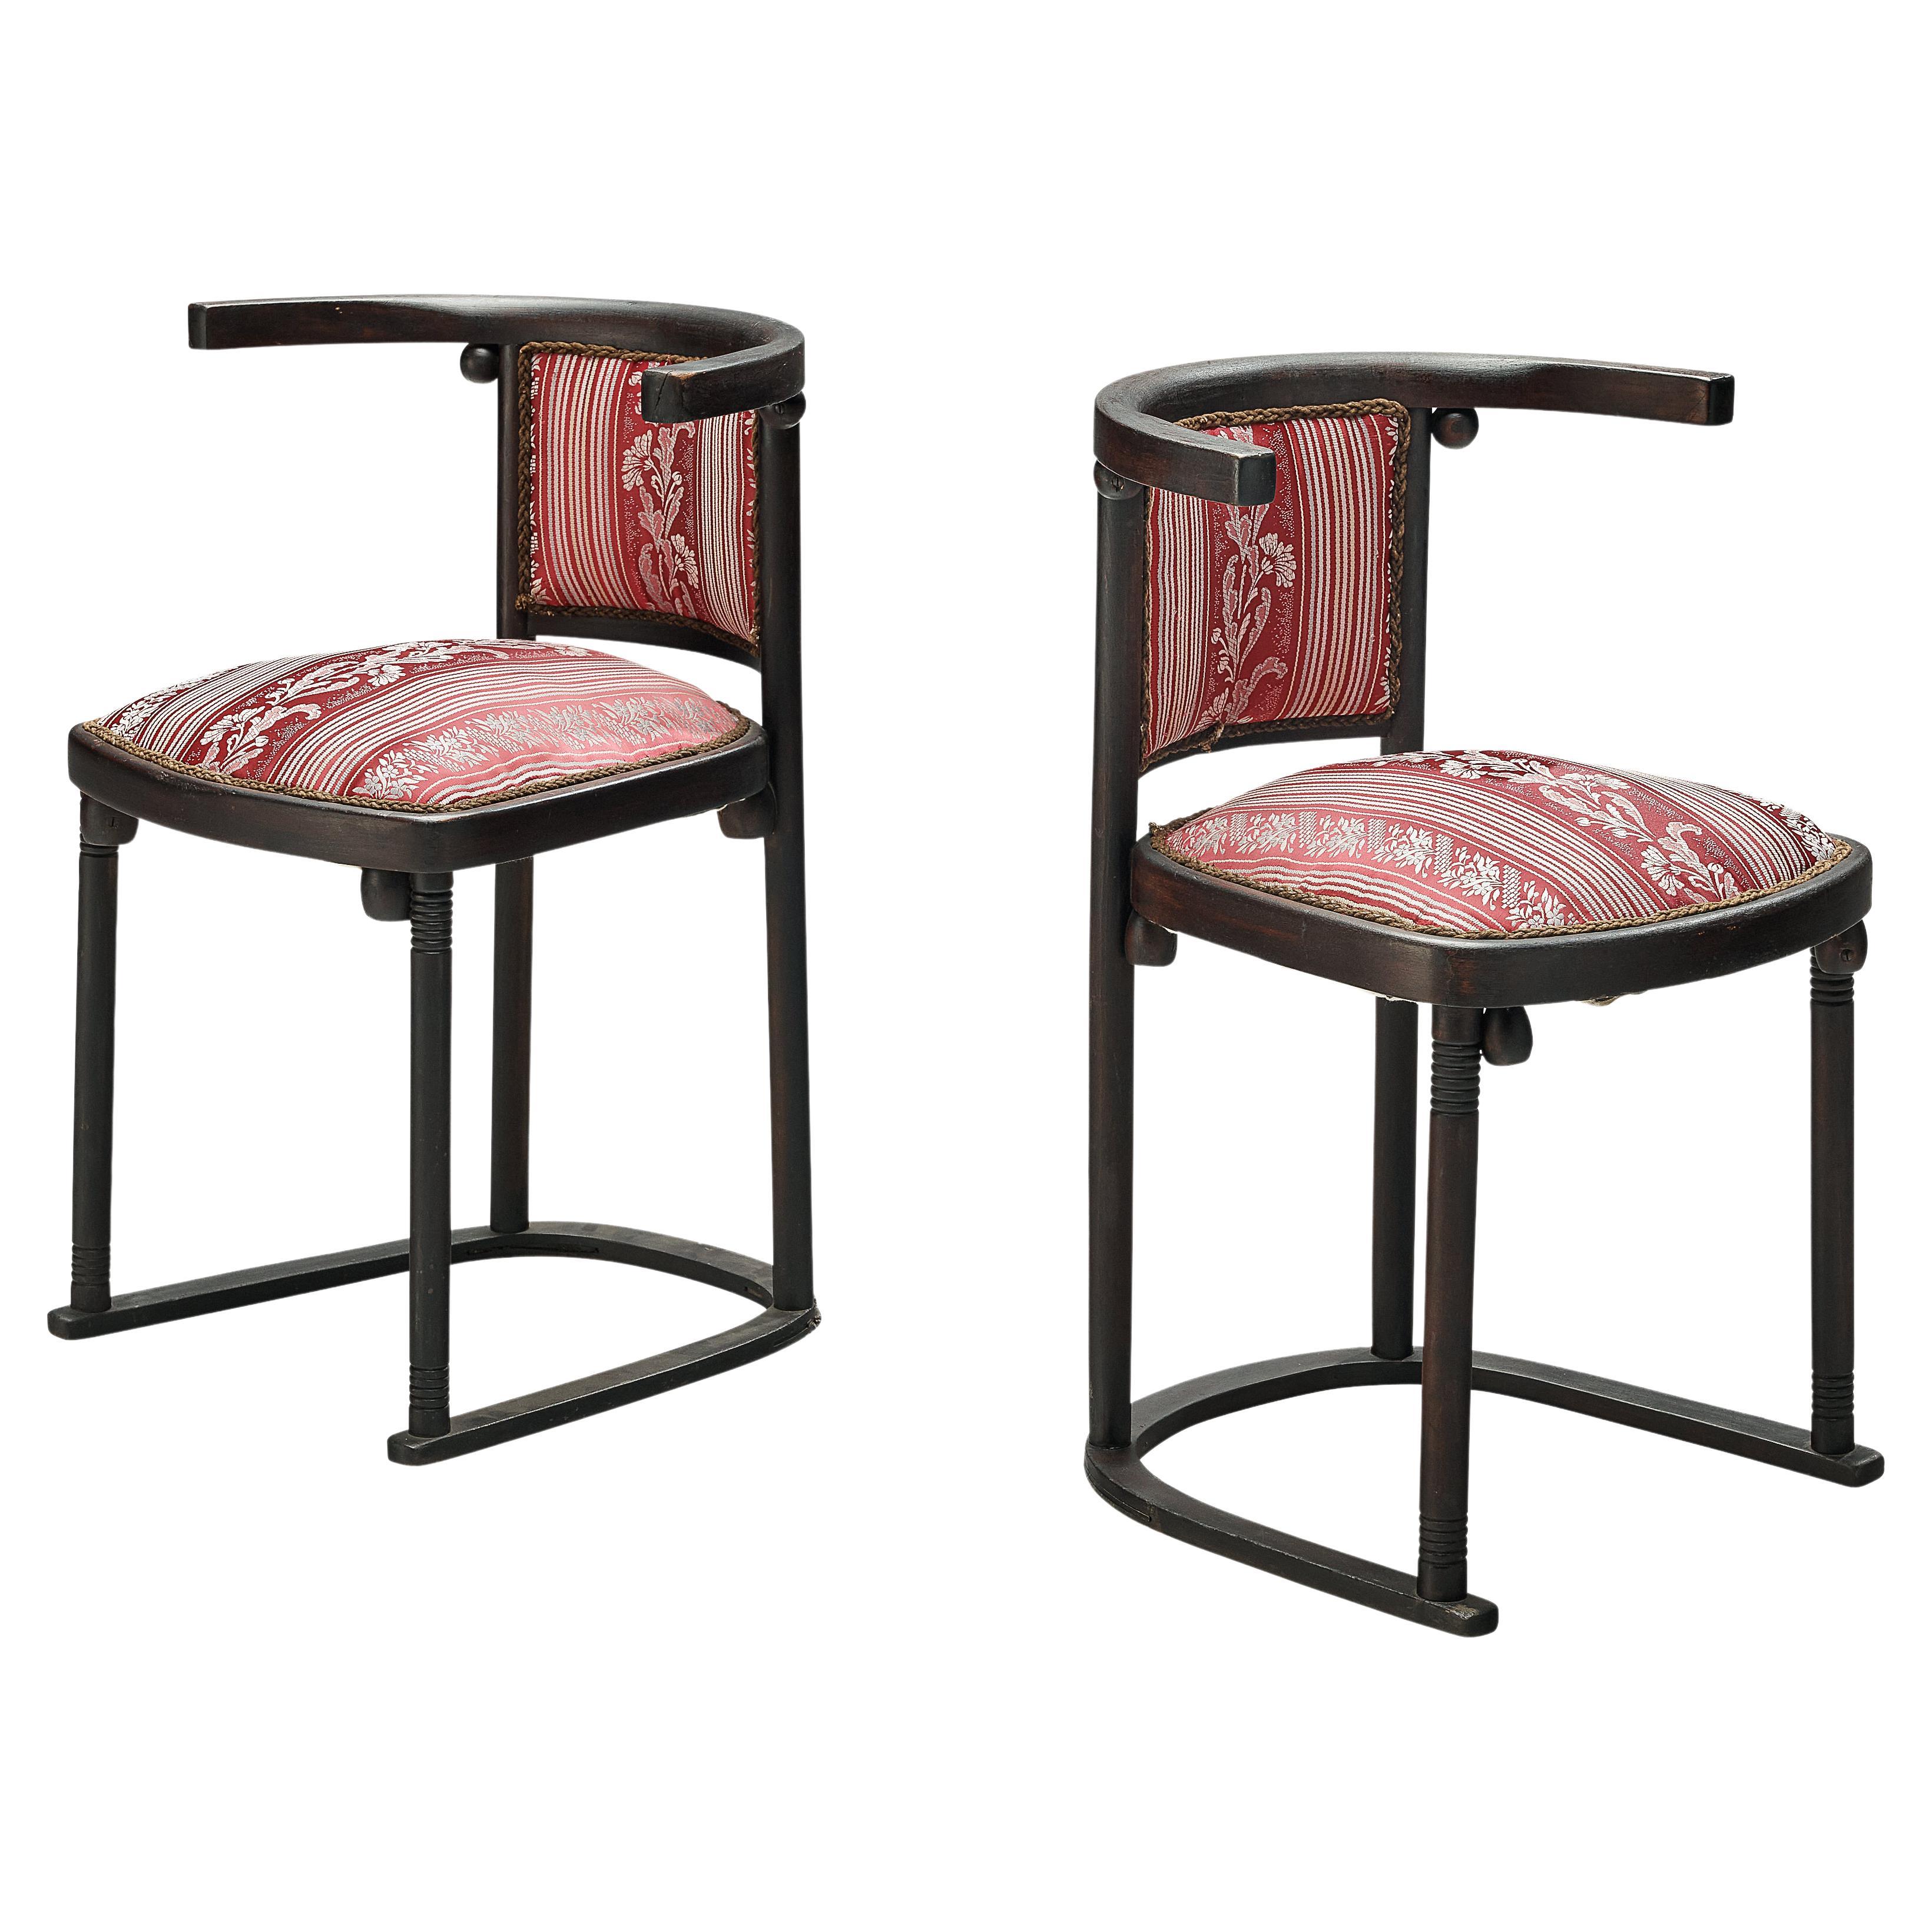 Josef Hoffmann ‘Fledermaus’ Pair of Dining Chairs in Floral Upholstery